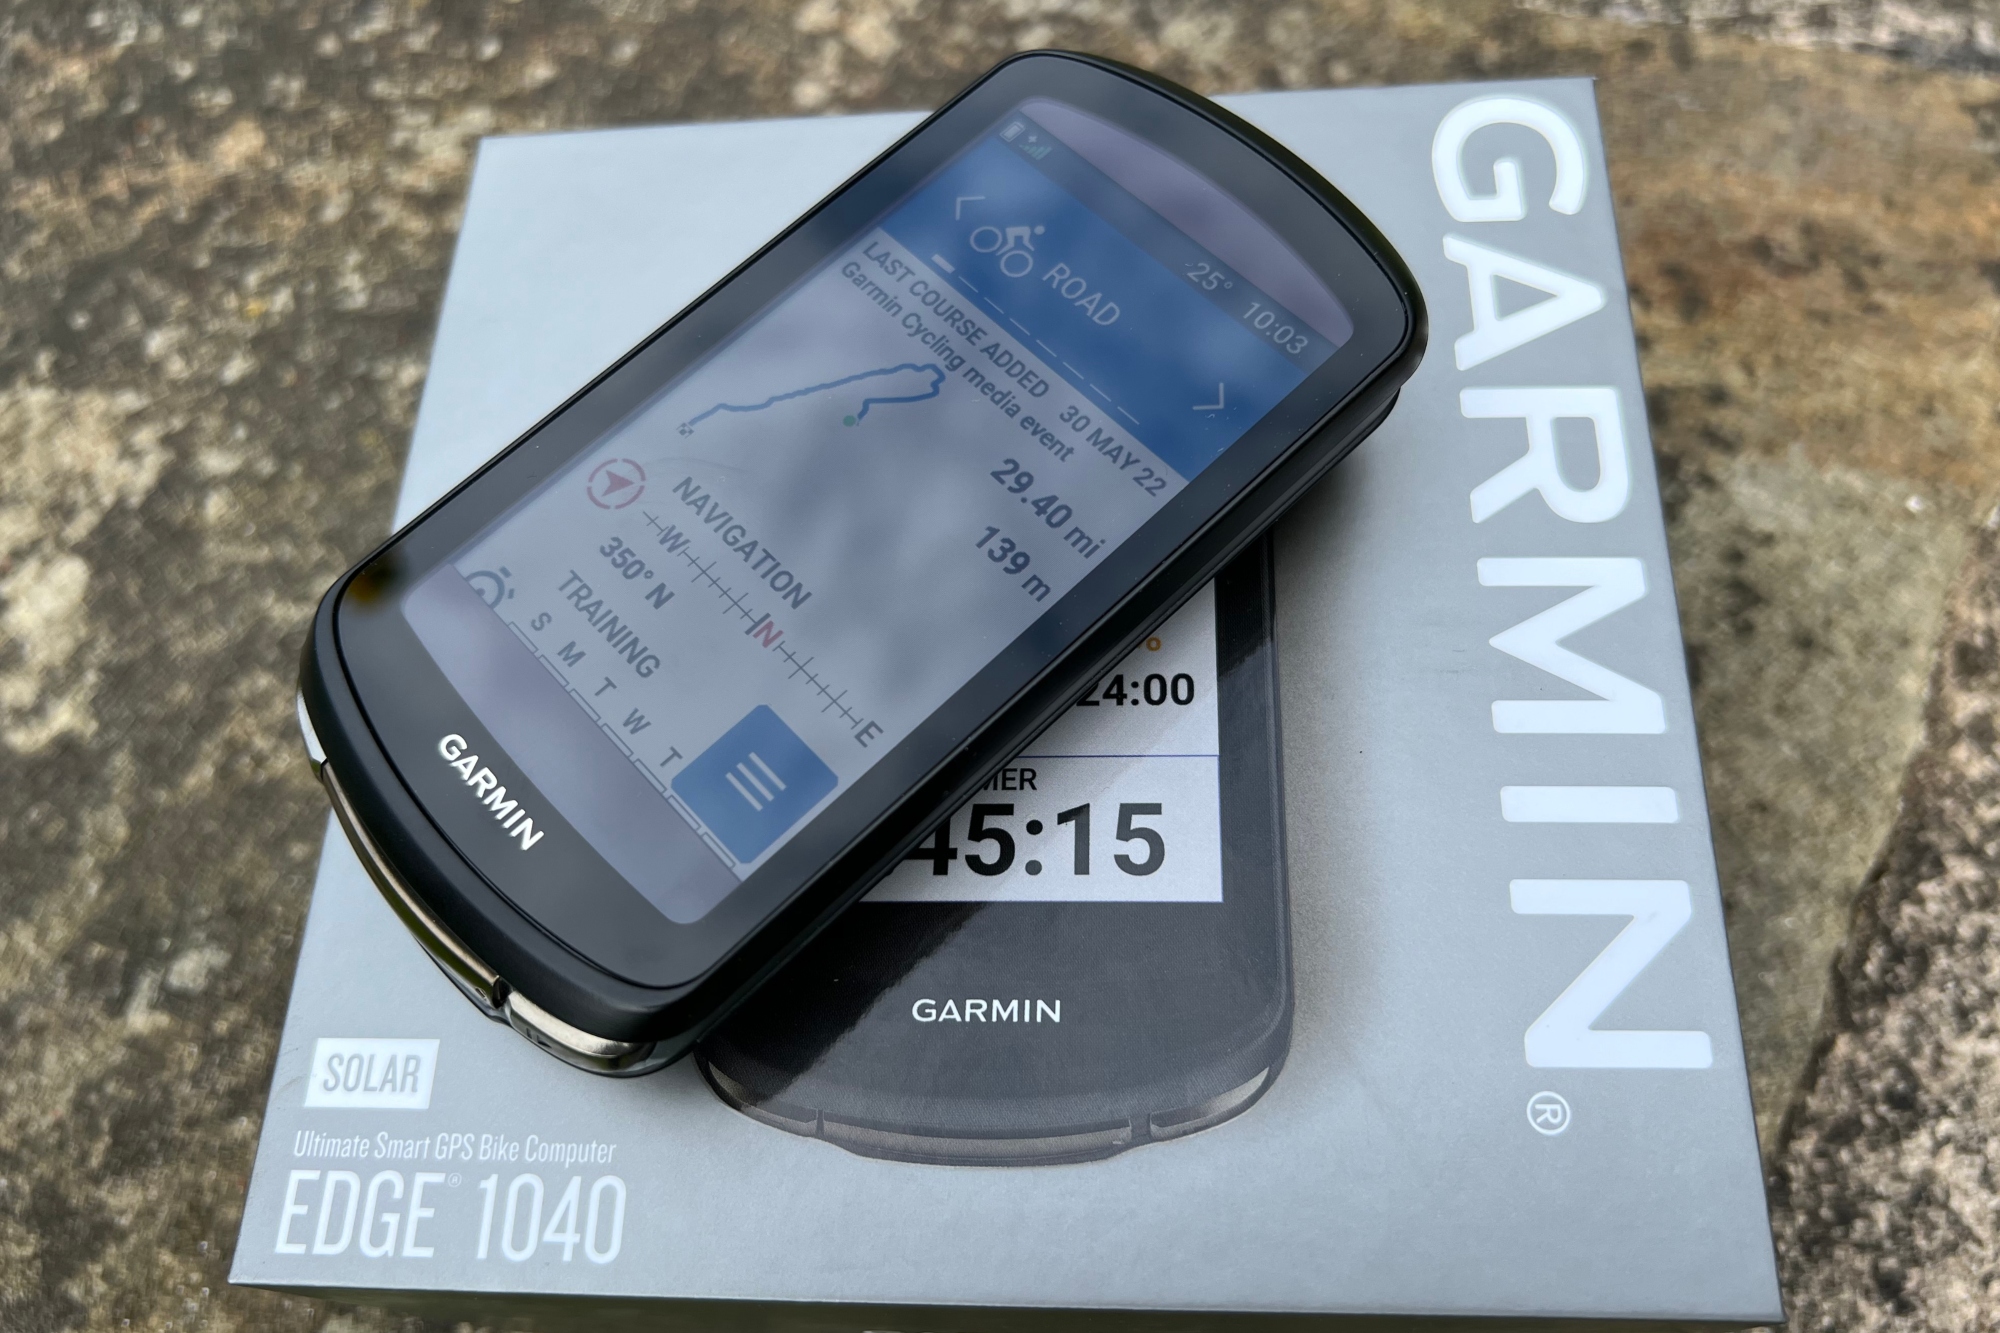 Garmin Edge 1040 Solar bike computer in review